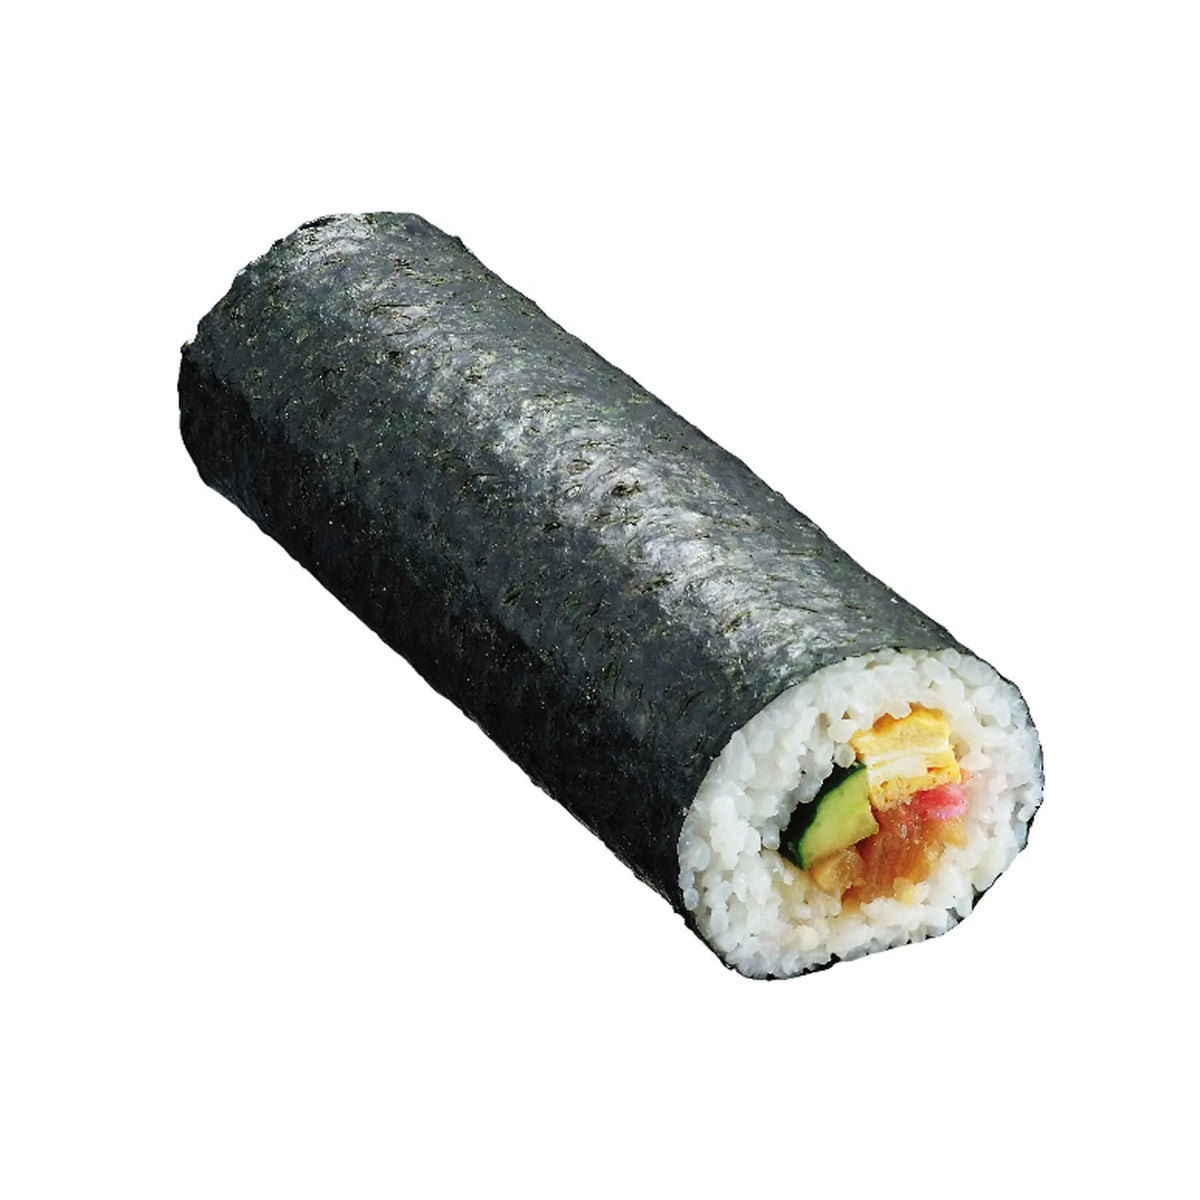 Akebono Polypropylene Thick Sushi Roll Mold